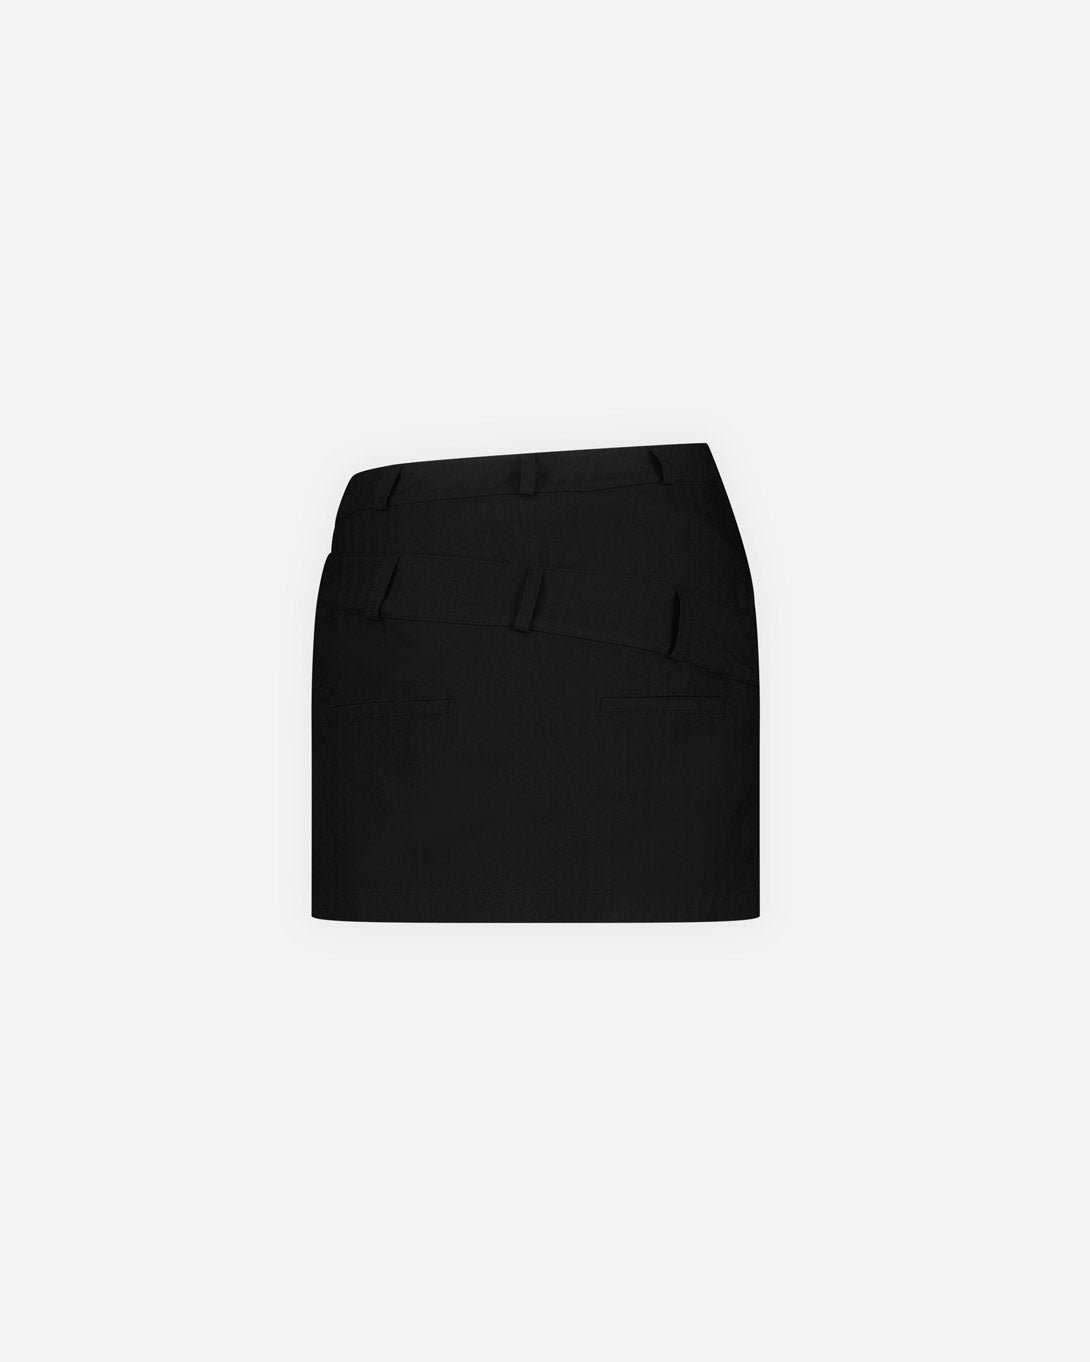 Double Skirt - Dresses & Skirts - Pressiat - Elevastor